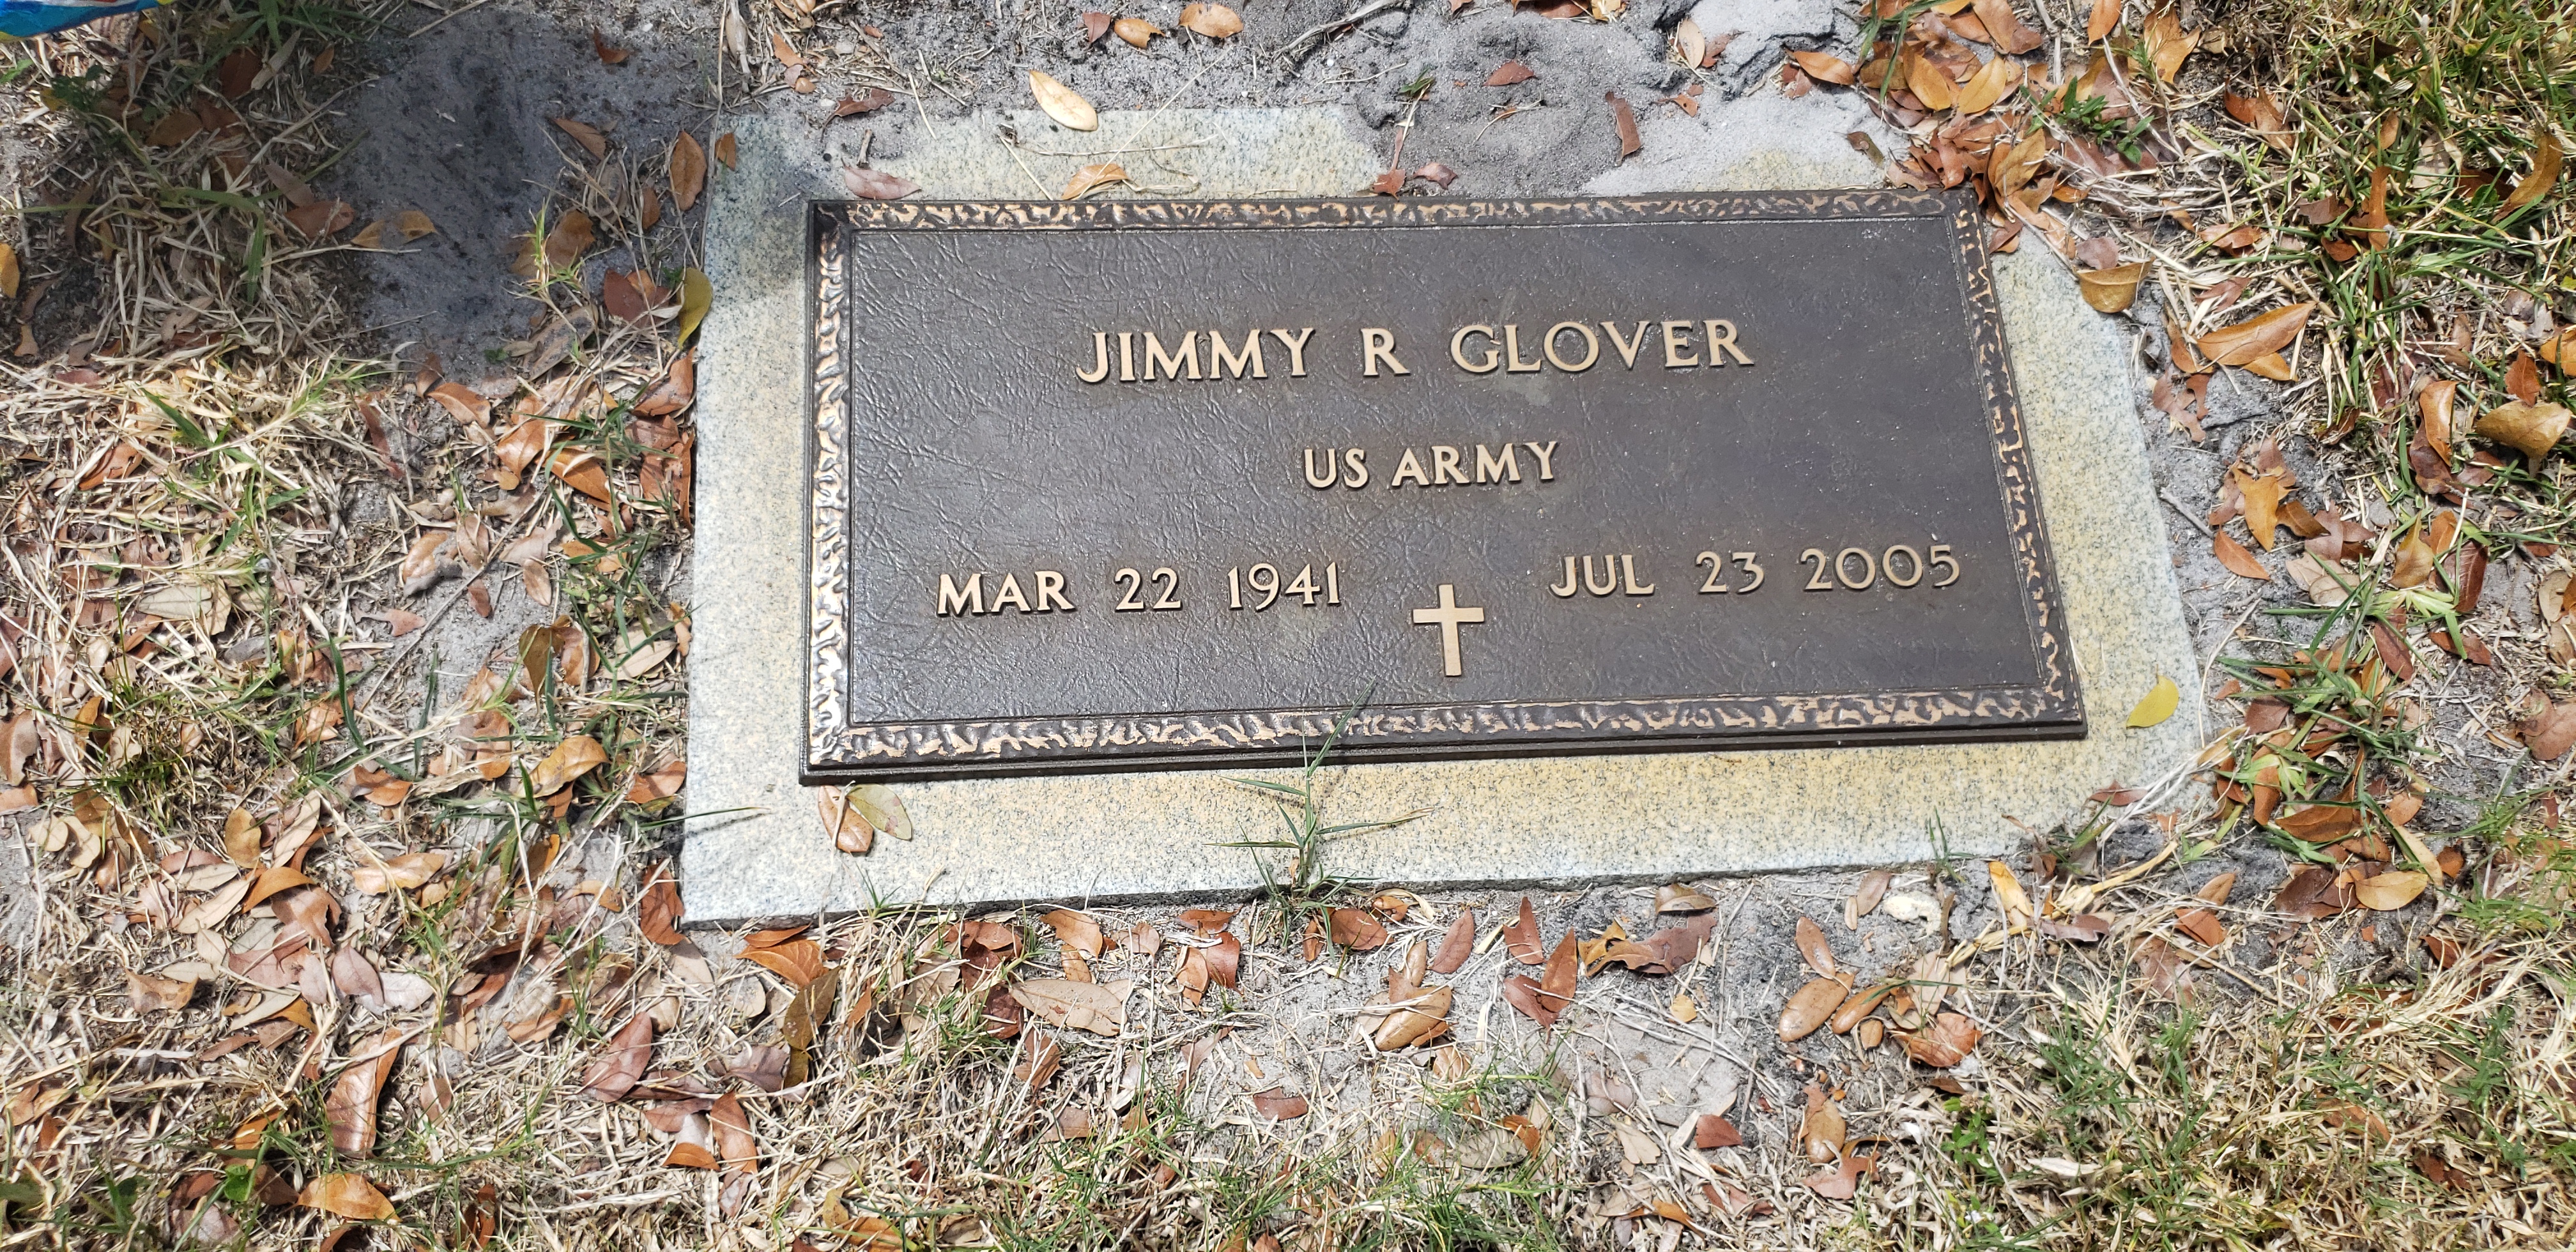 Jimmy R Glover